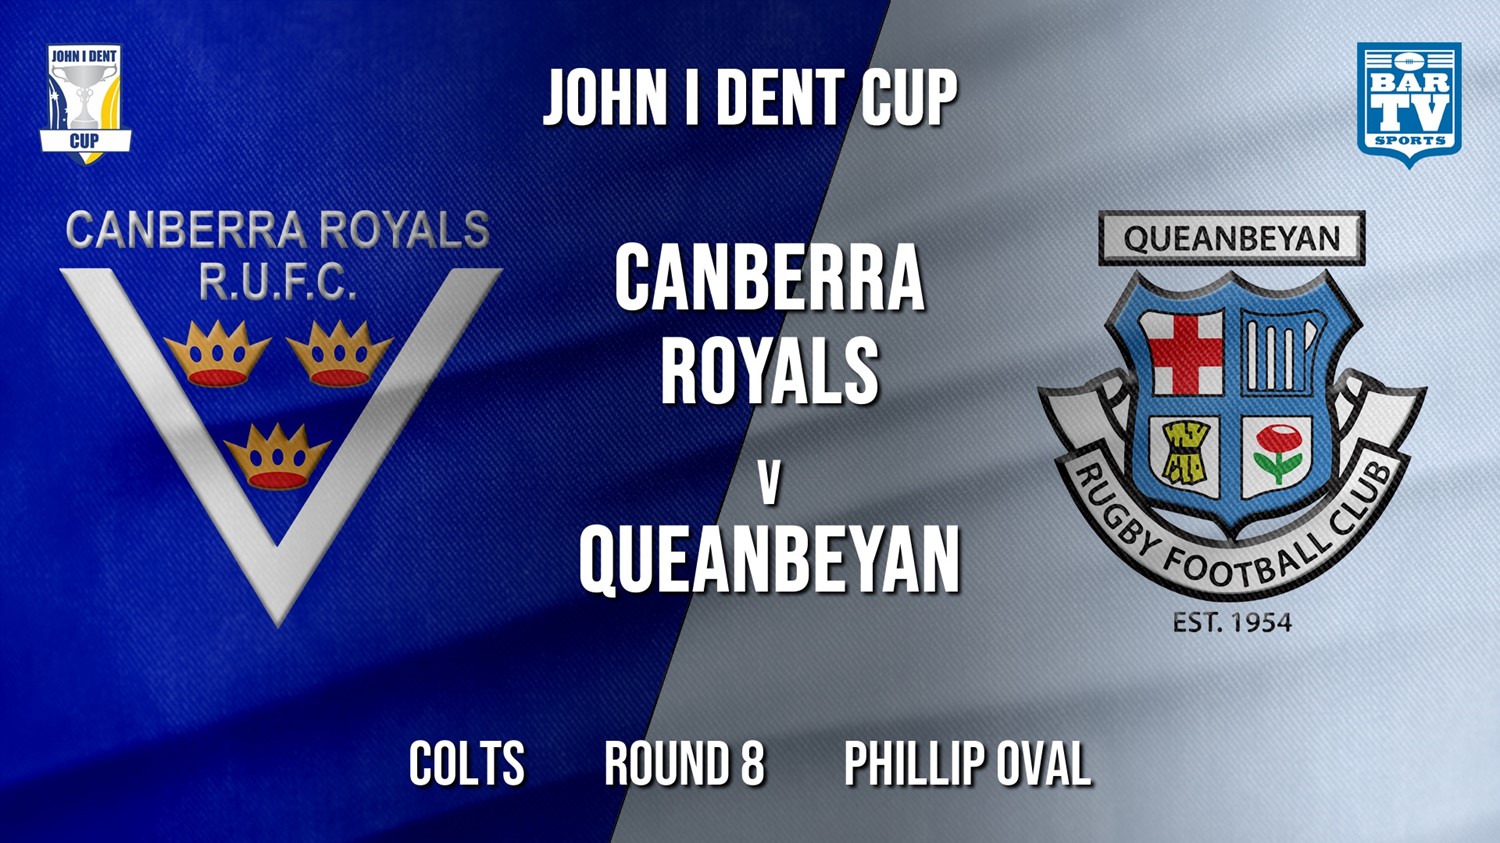 John I Dent Round 8 - Colts - Canberra Royals v Queanbeyan Whites Minigame Slate Image